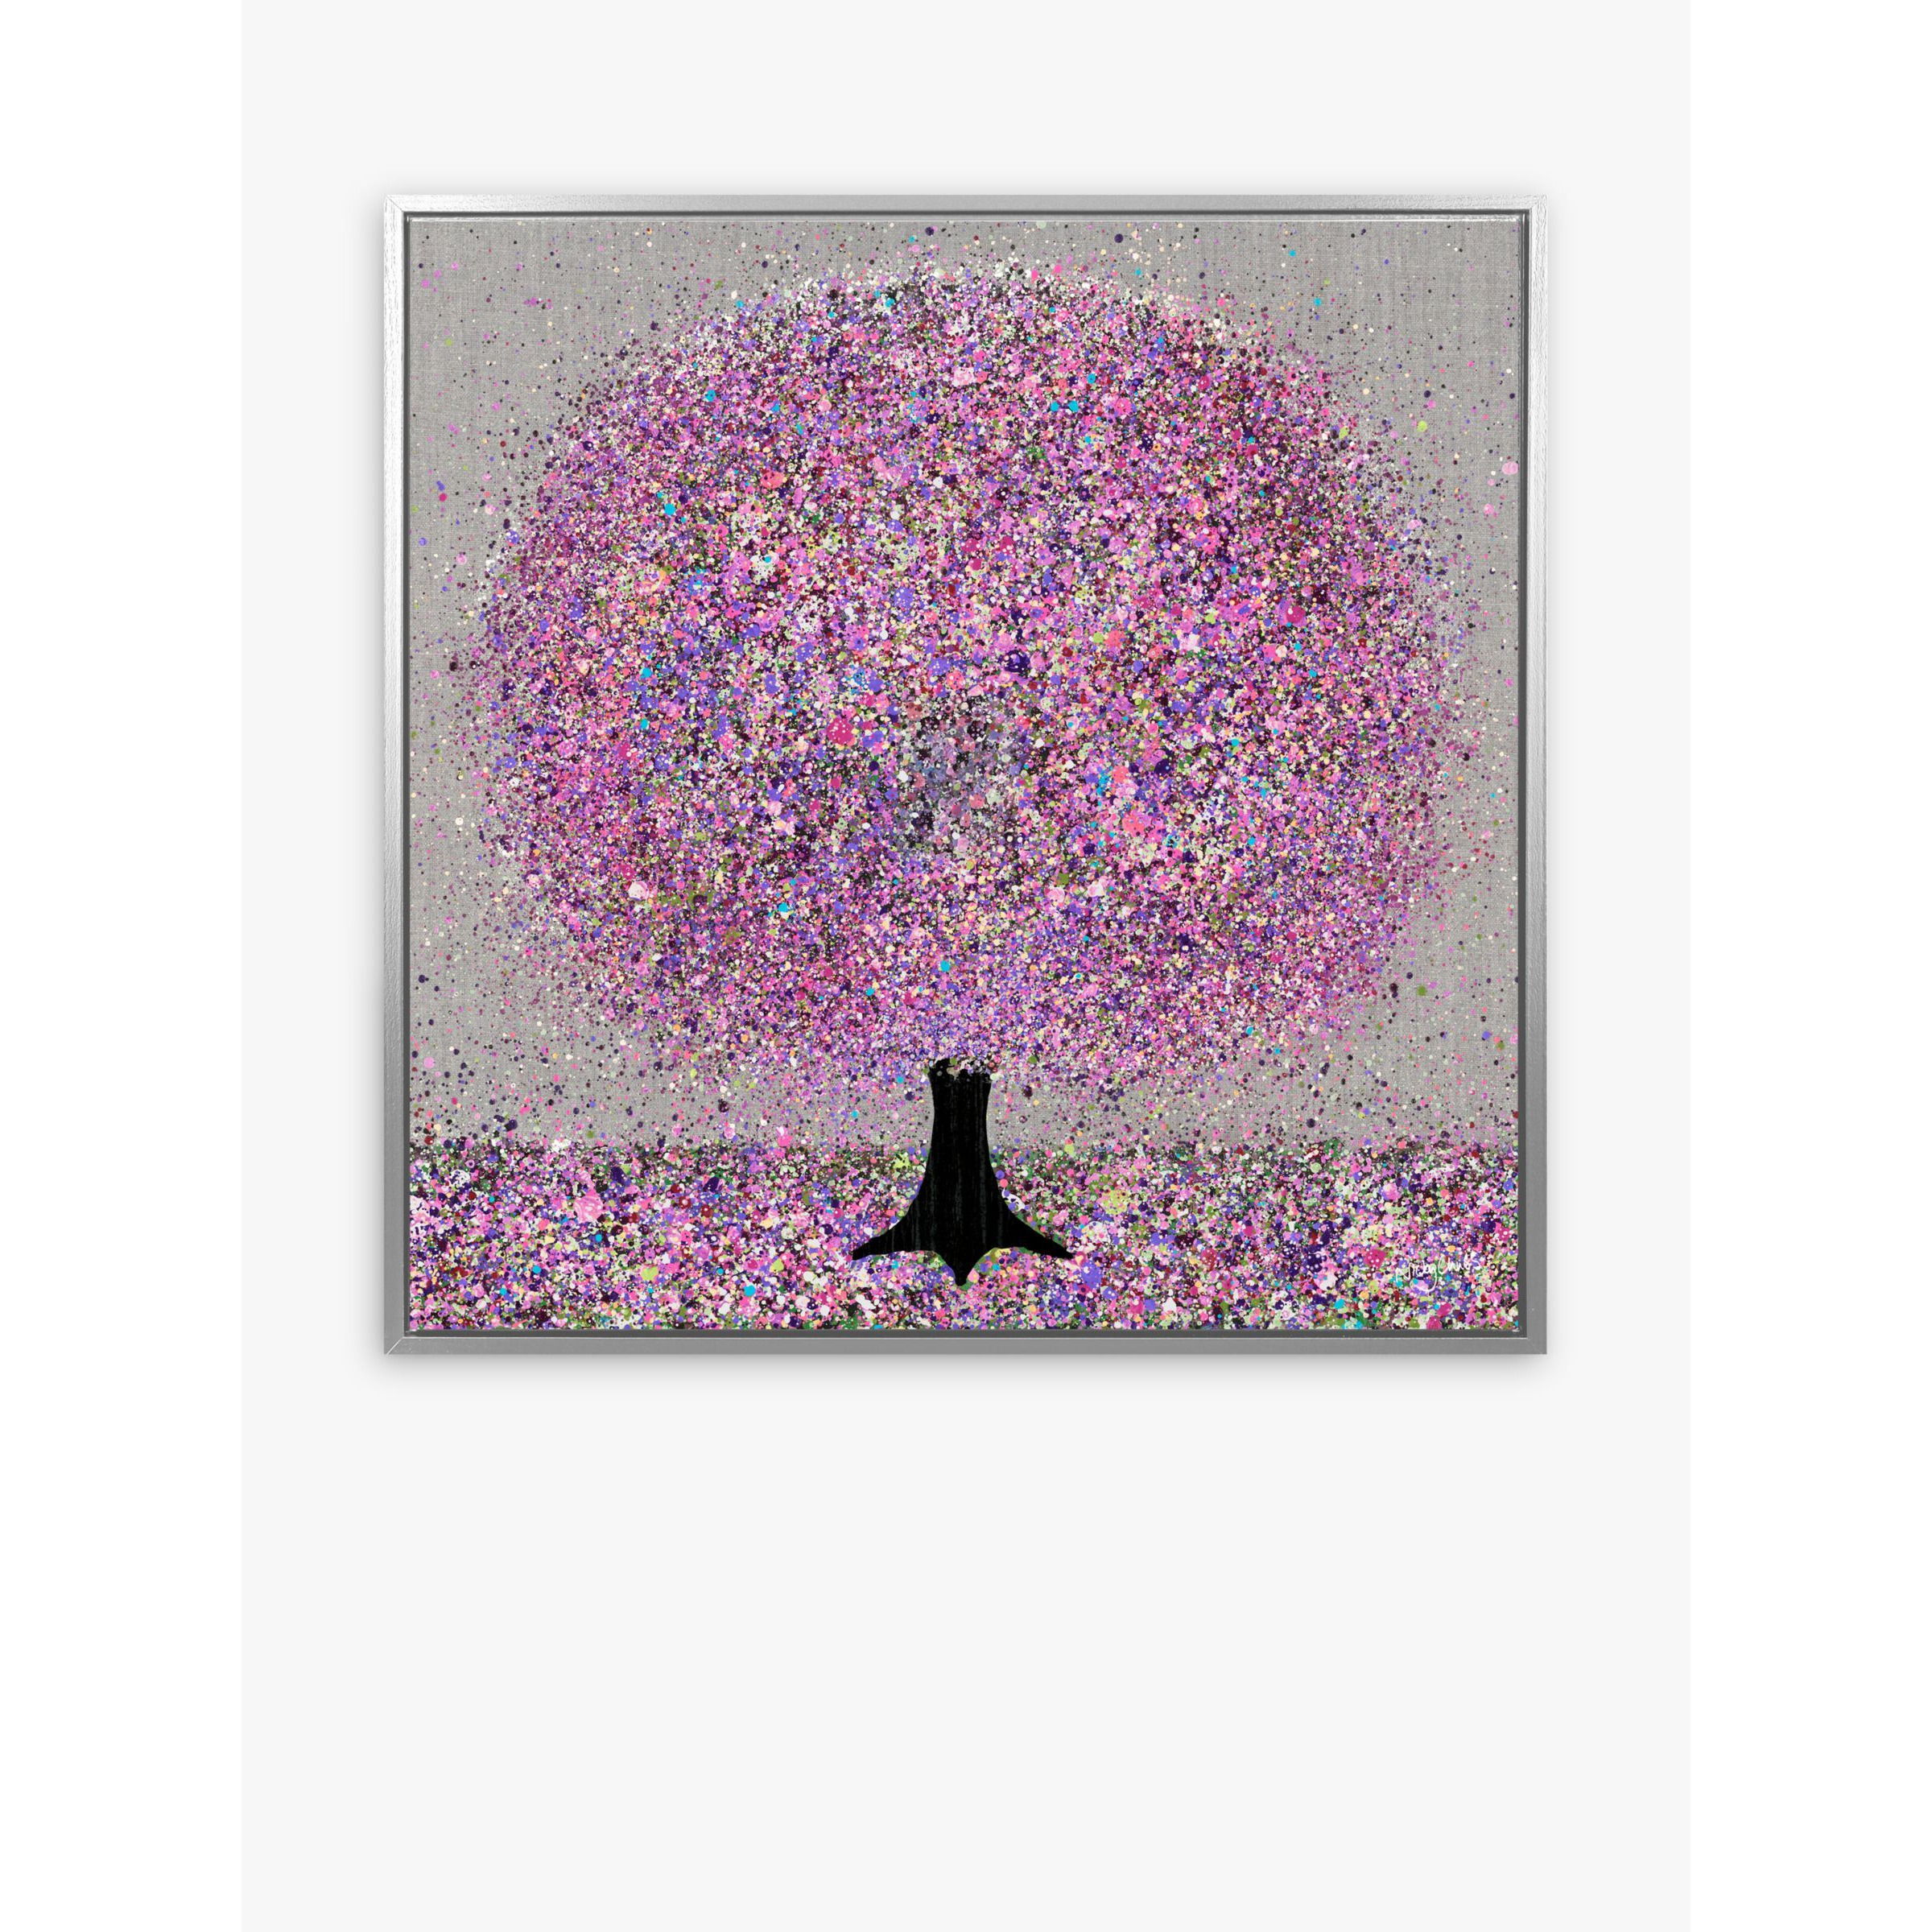 Nicky Chubb - 'Dotty Spring' Framed Canvas Print & Mount, 84.5 x 84.5cm, Purple